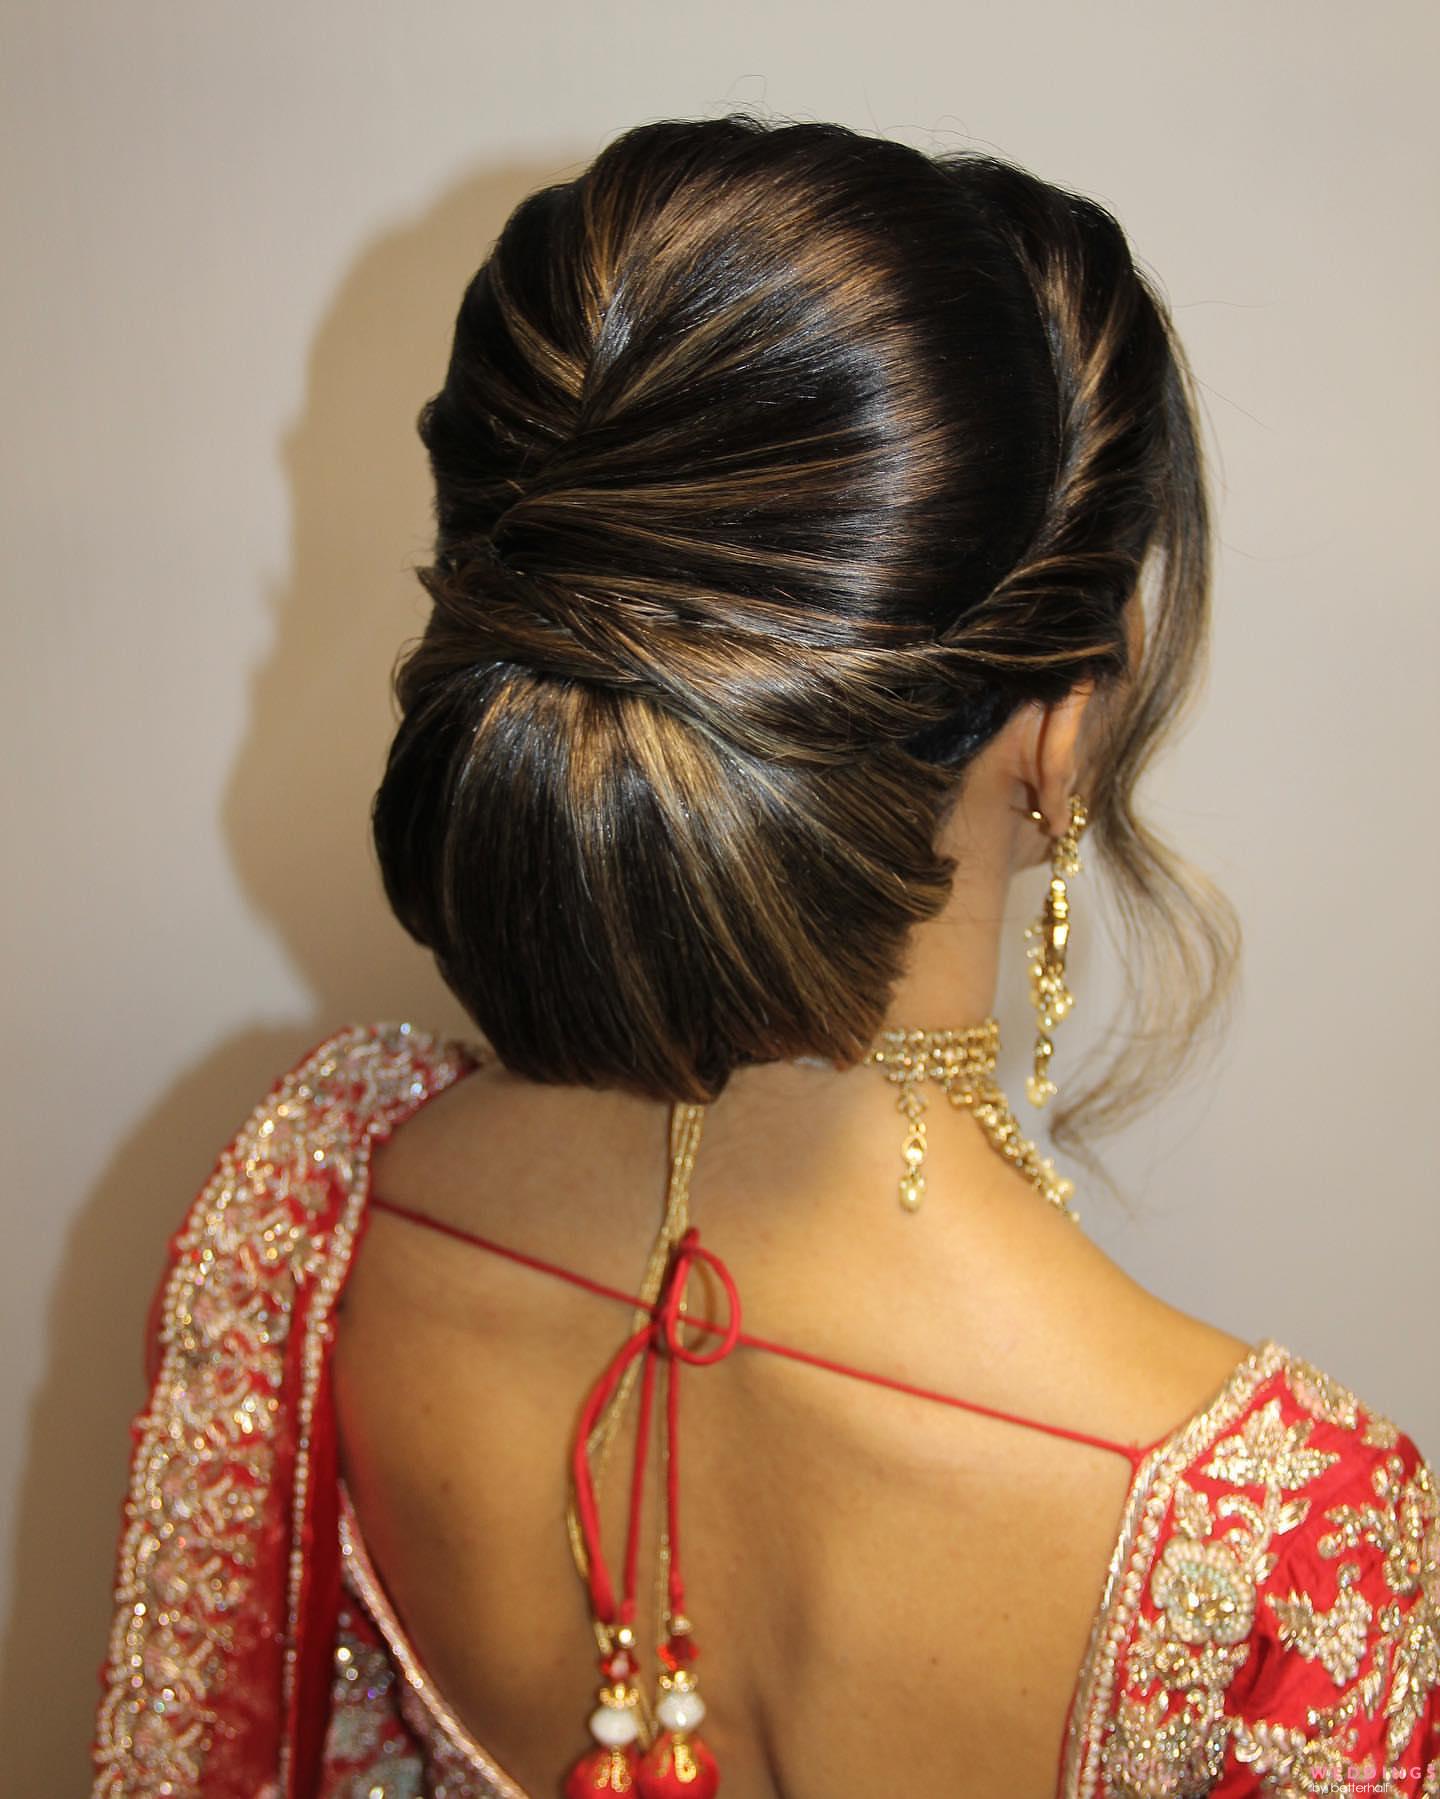 Messy Bun Wedding Hair | POPSUGAR Beauty